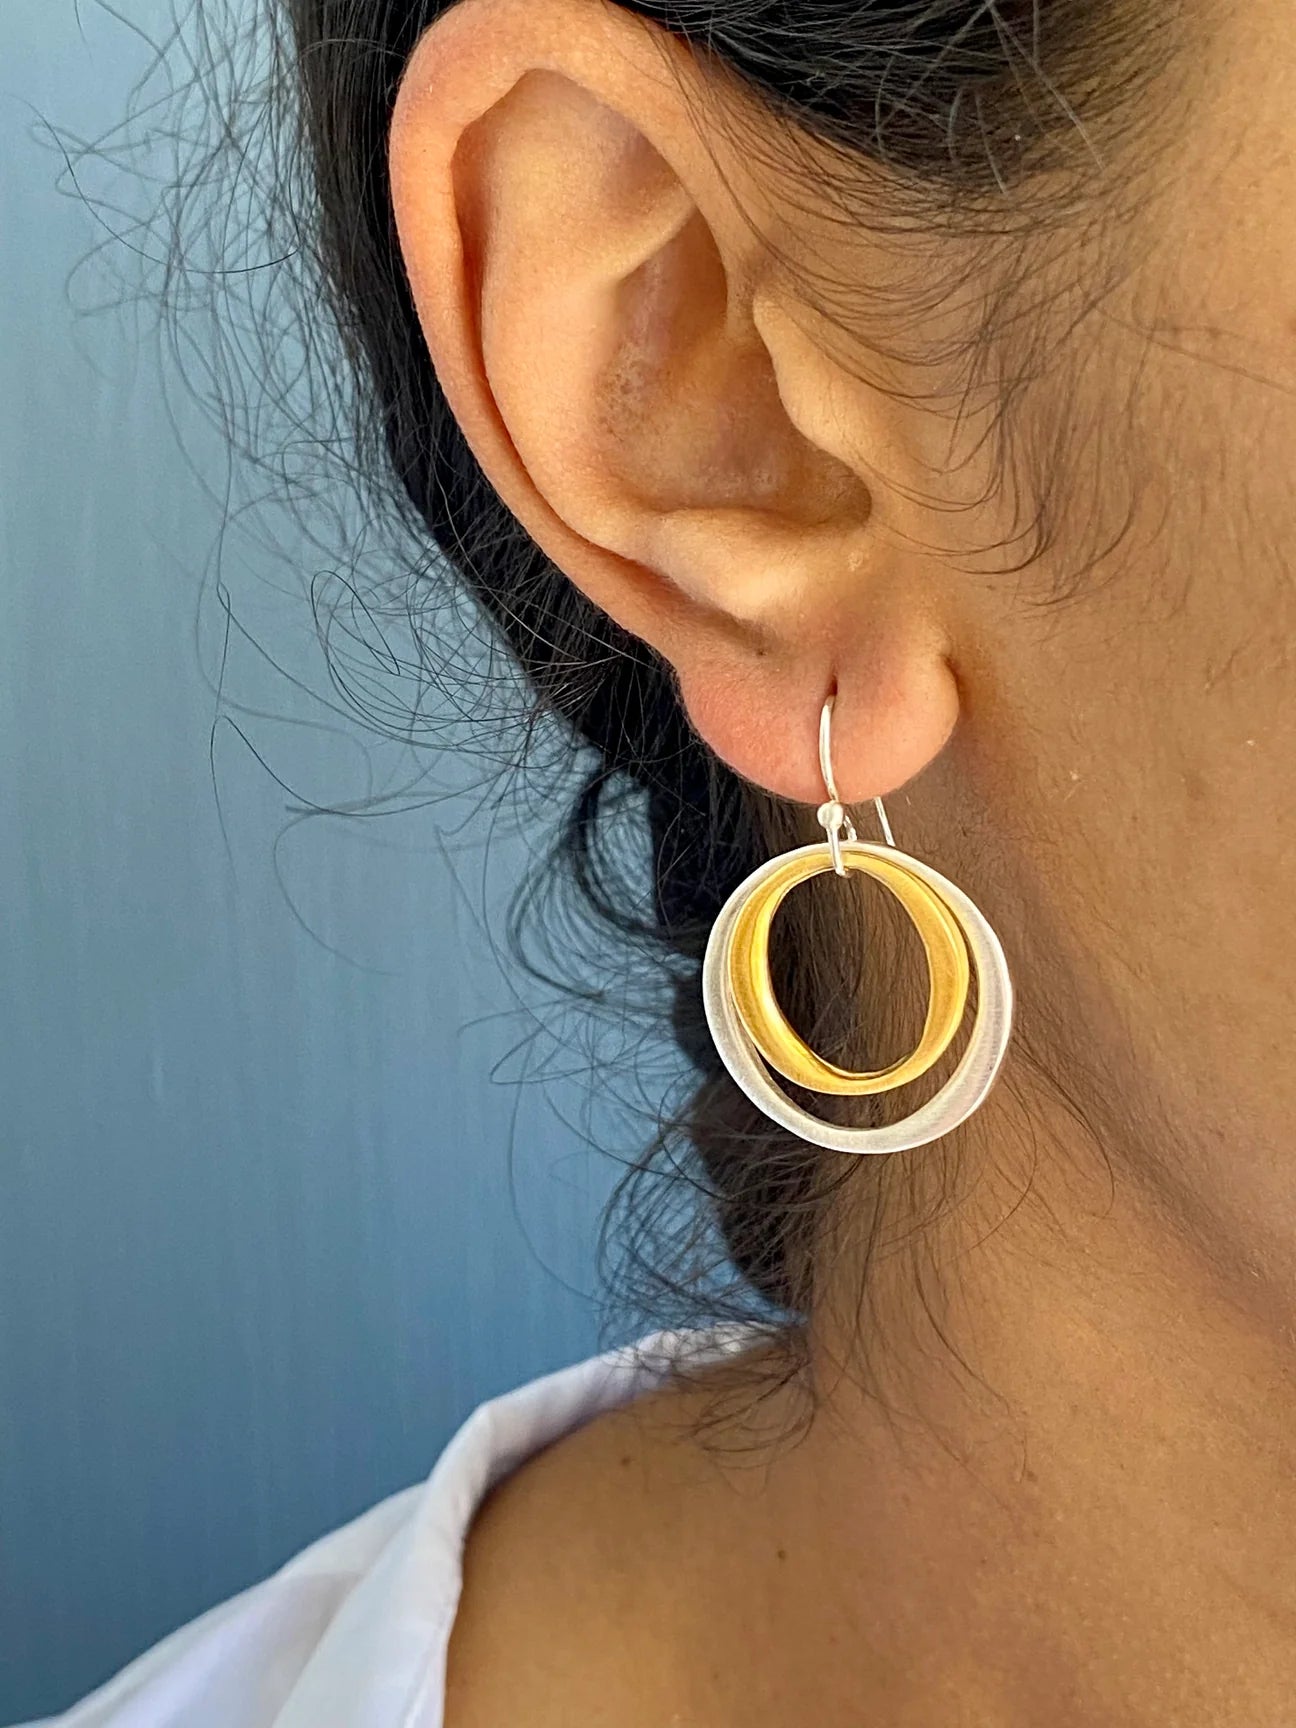 Silver & Vermeil Double Circles Earrings